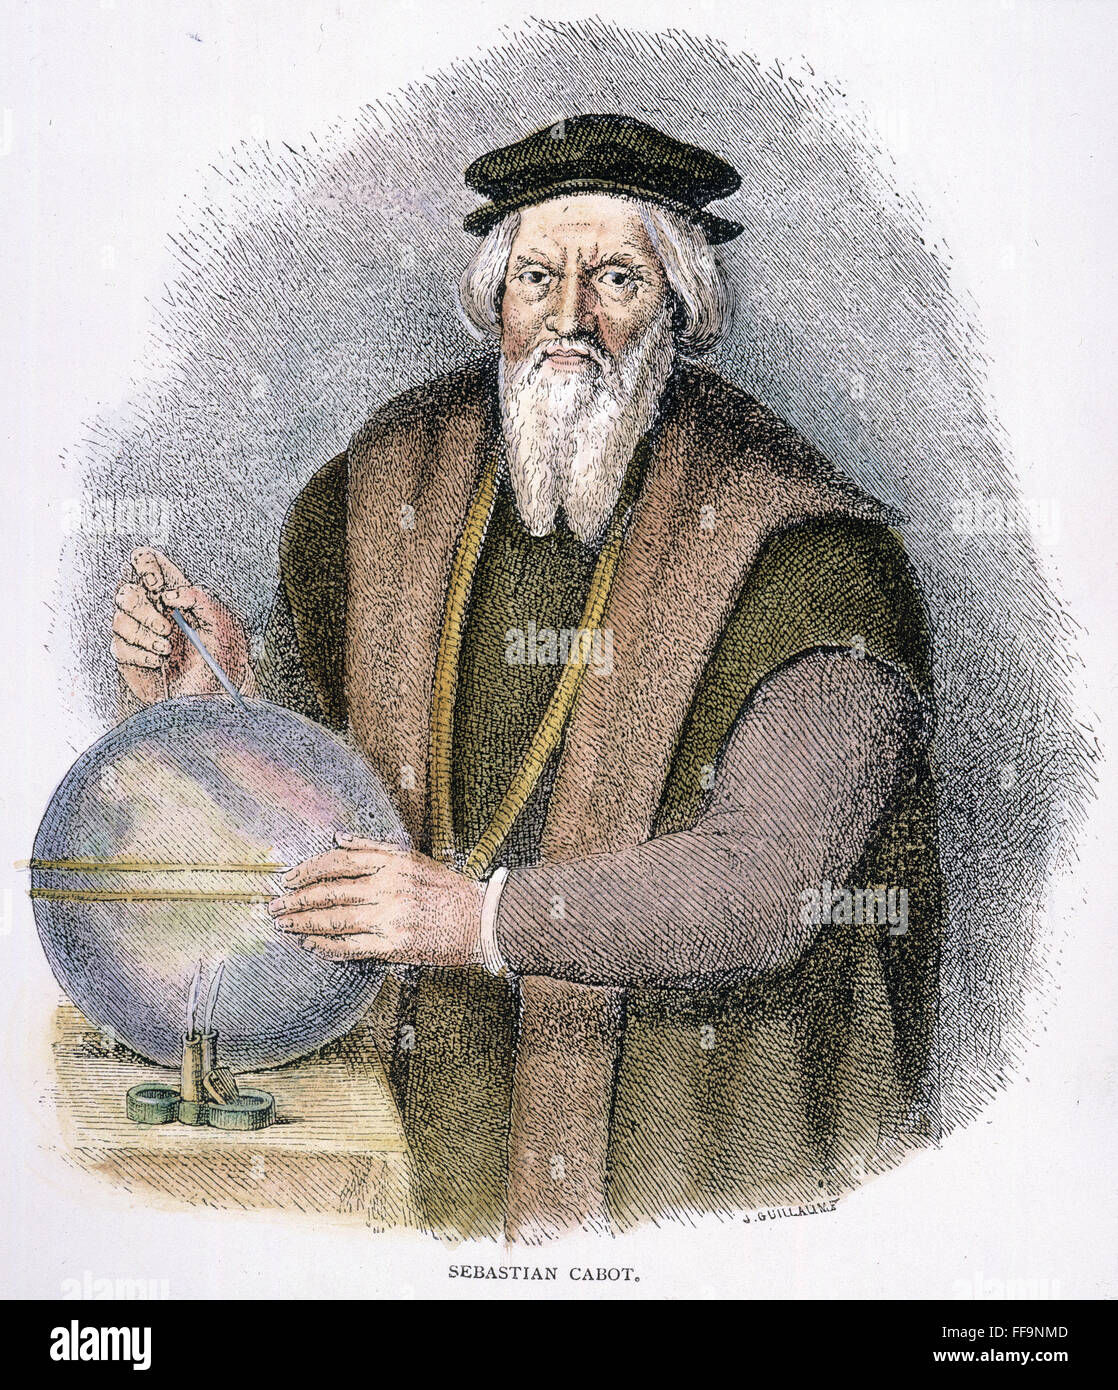 SEBASTIAN CABOT /n(1476?-1557). Italian map maker, navigator and explorer. Wood engraving, 19th century. Stock Photo